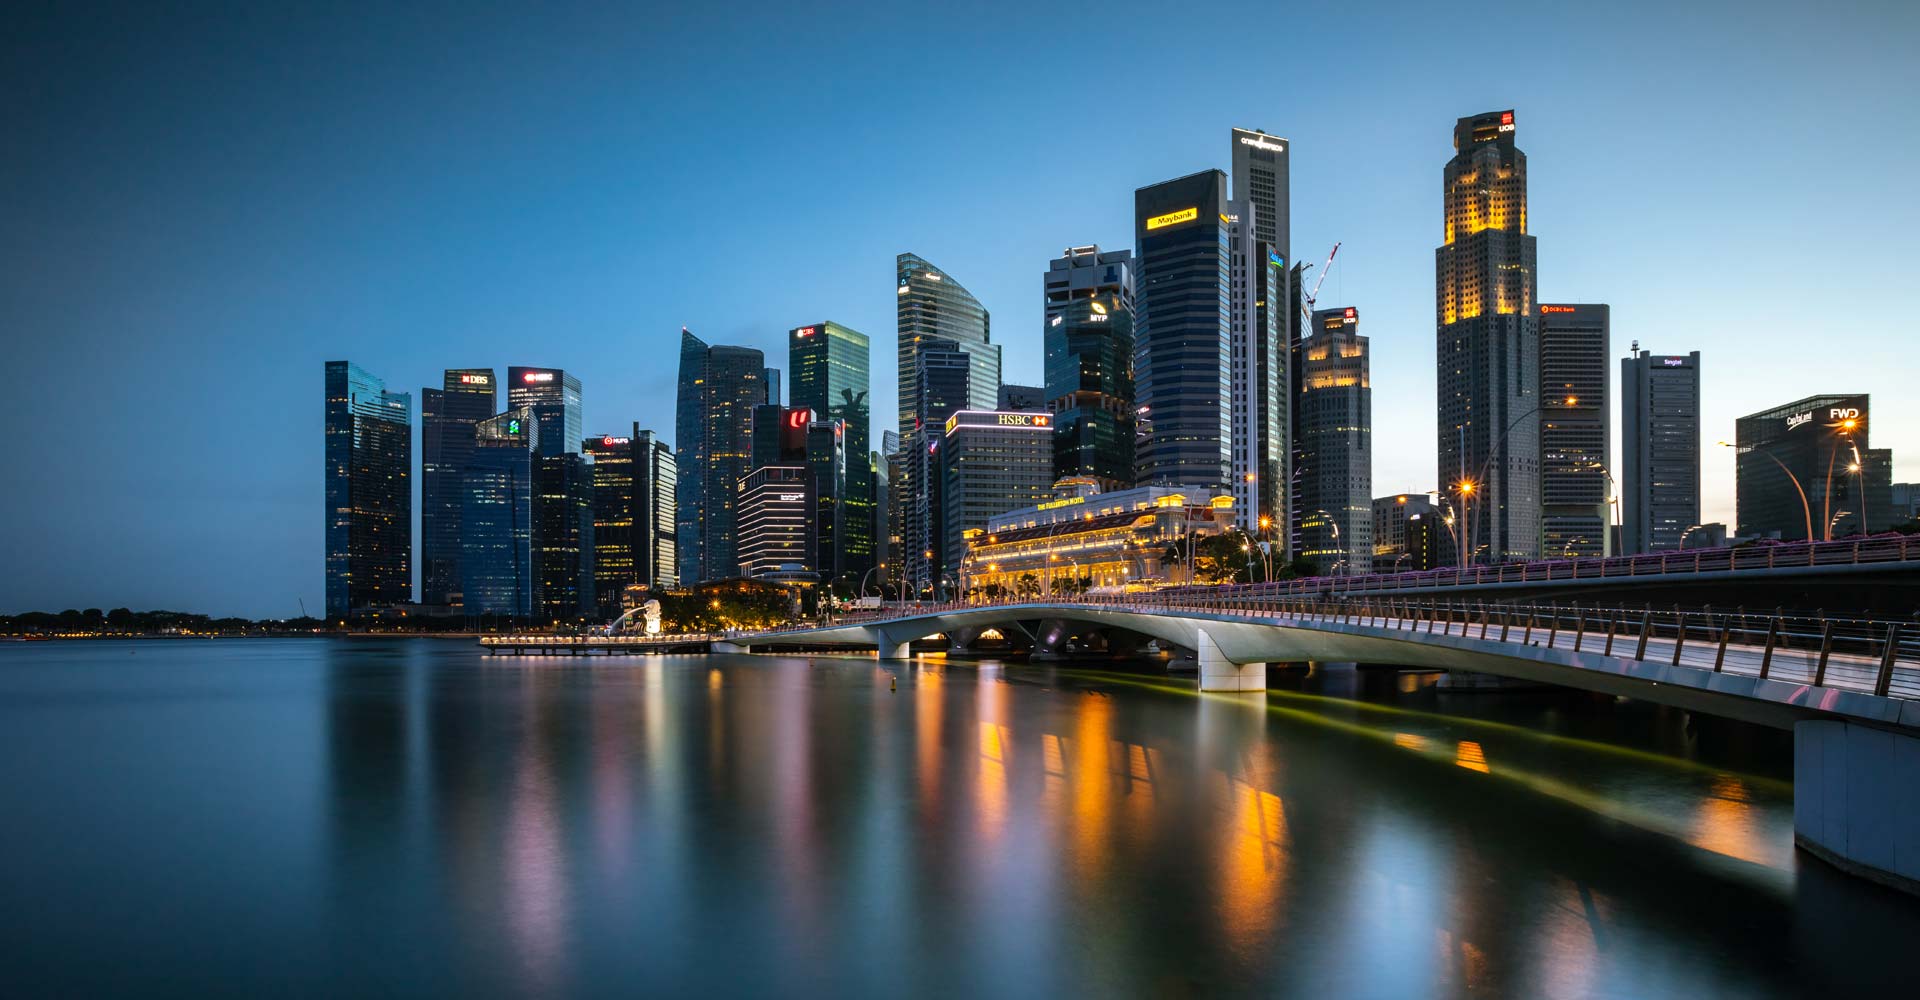 AVAR 2022 kicks off in Singapore